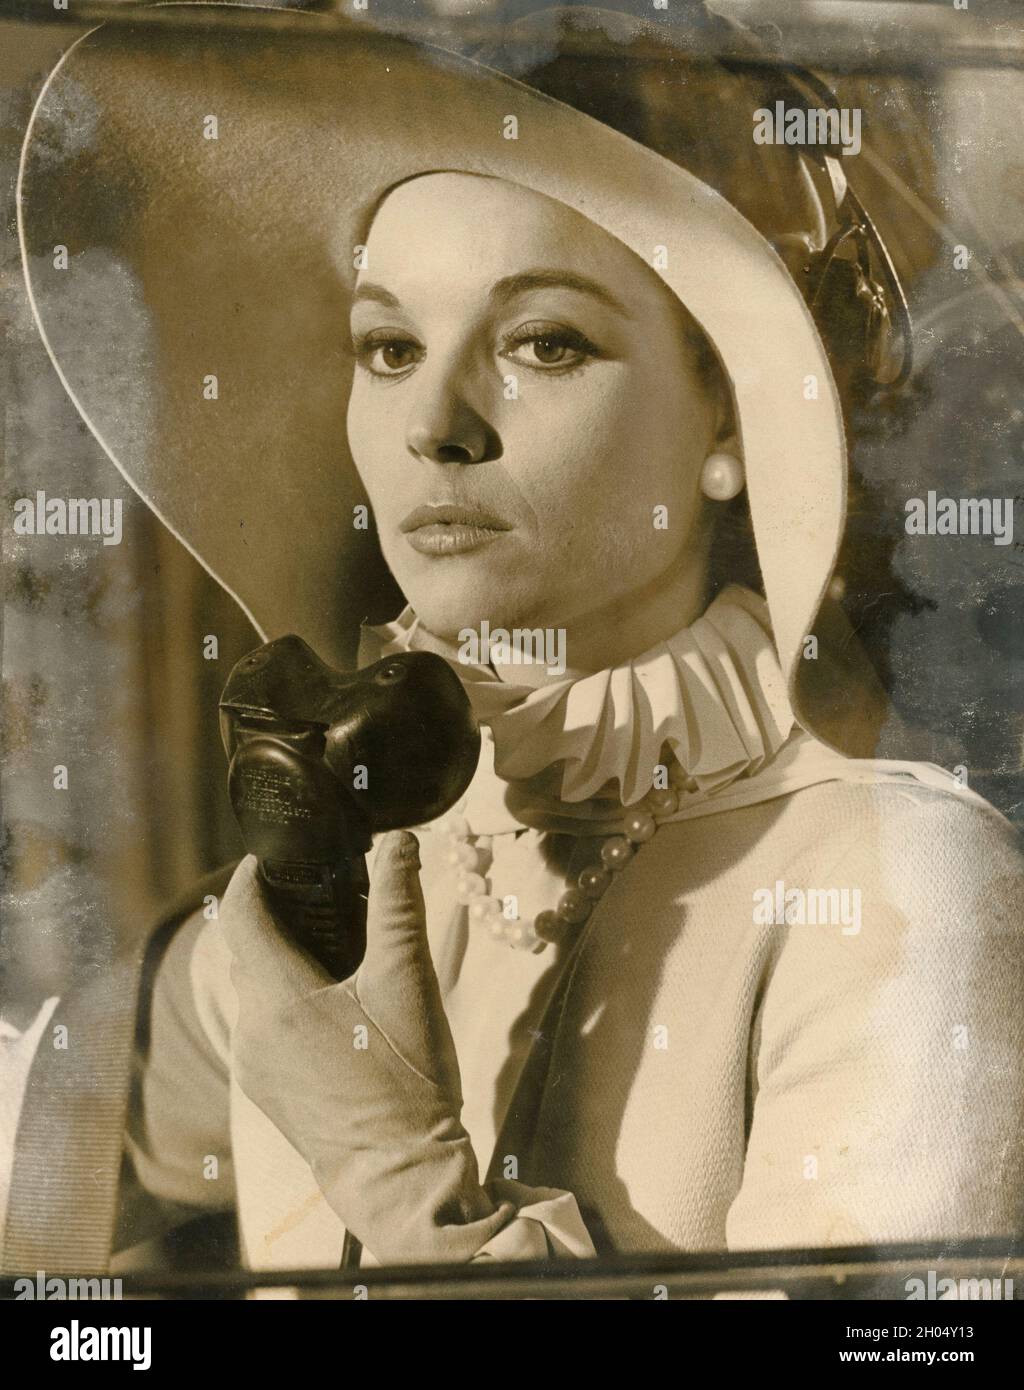 Italian actress and fashion model Elsa Martinelli, 1970s Stock Photo